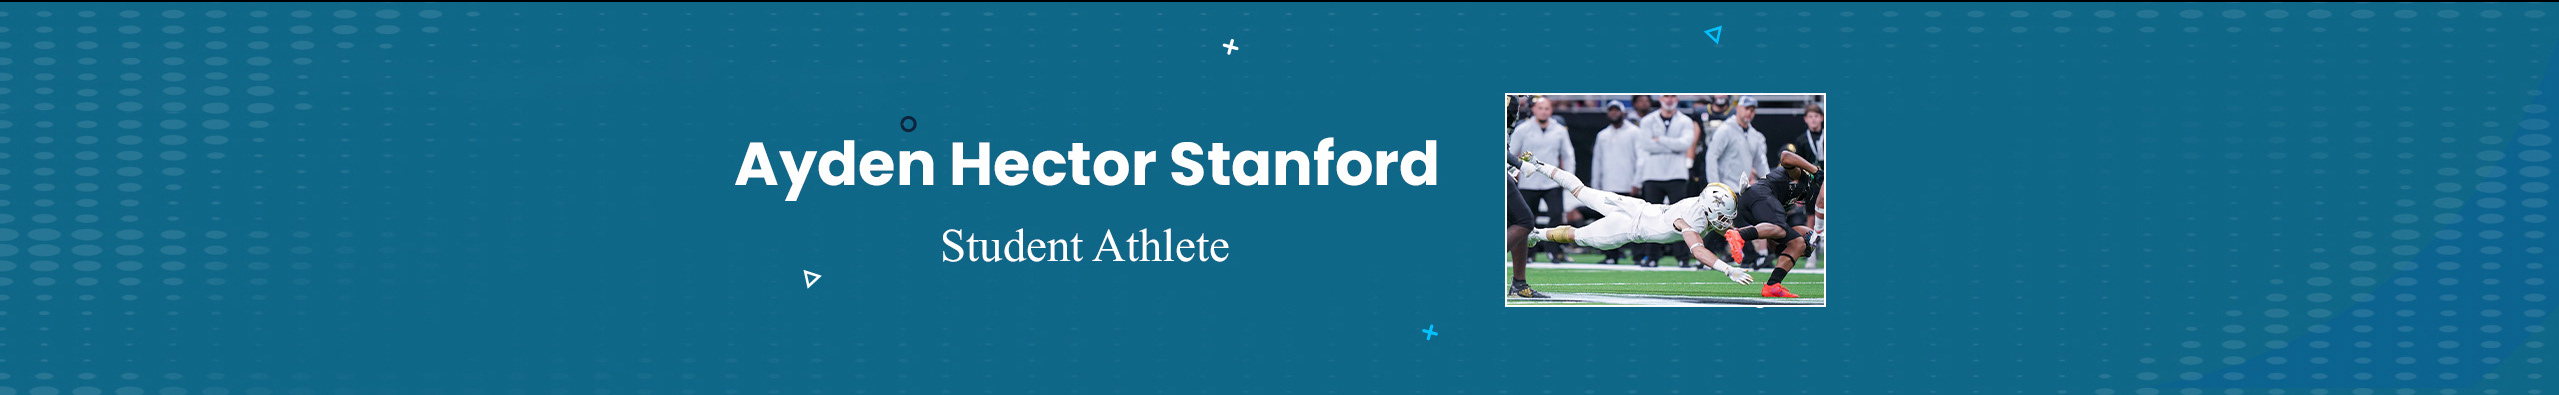 Ayden Hector Stanford's profile banner